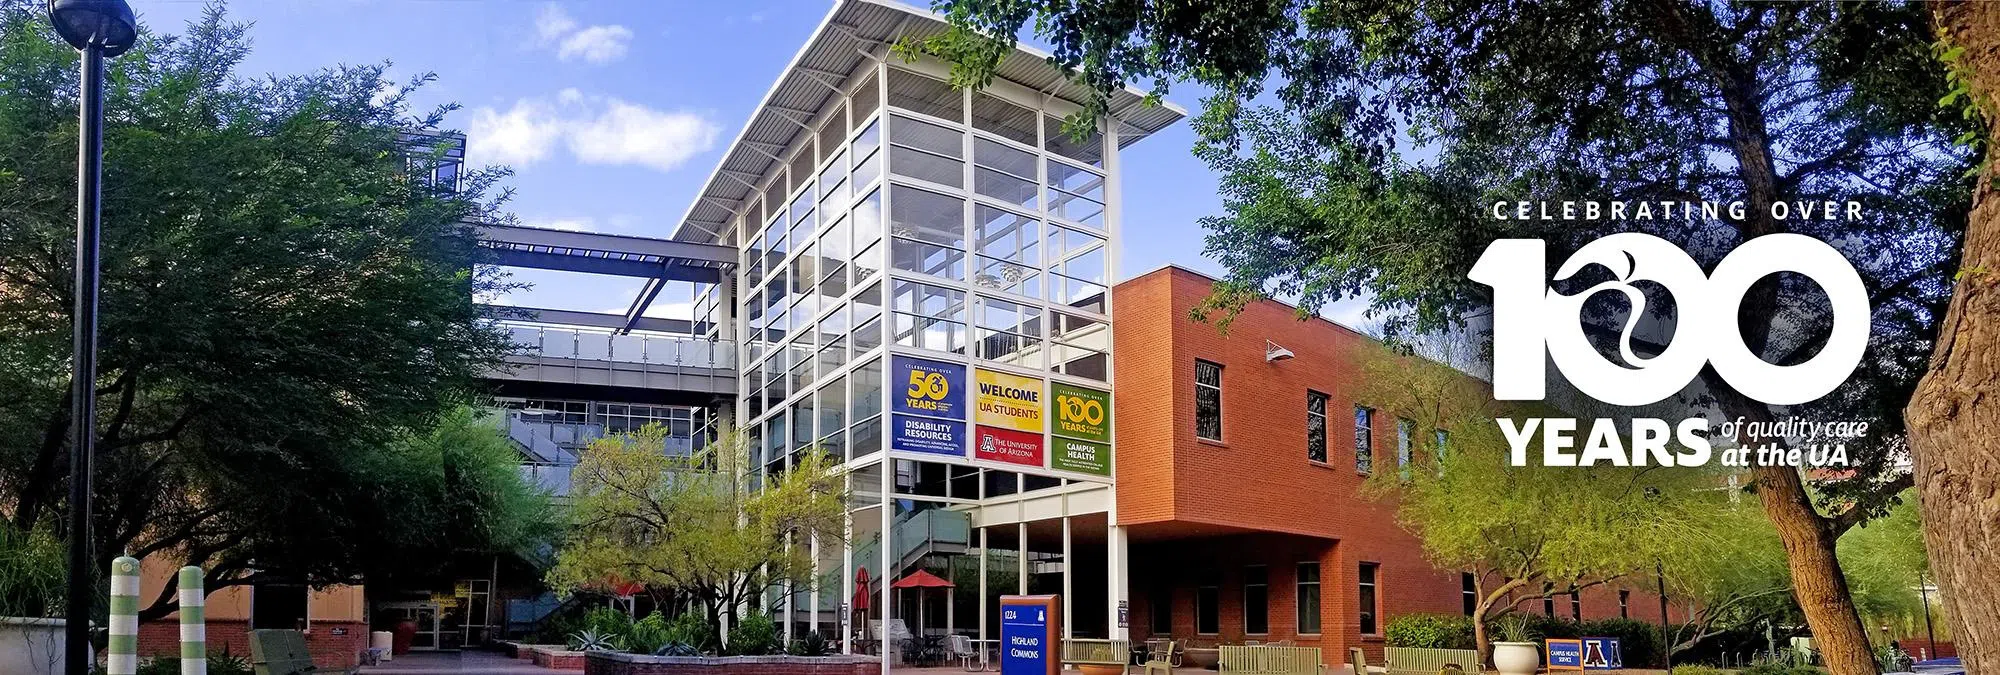 The Campus Health building